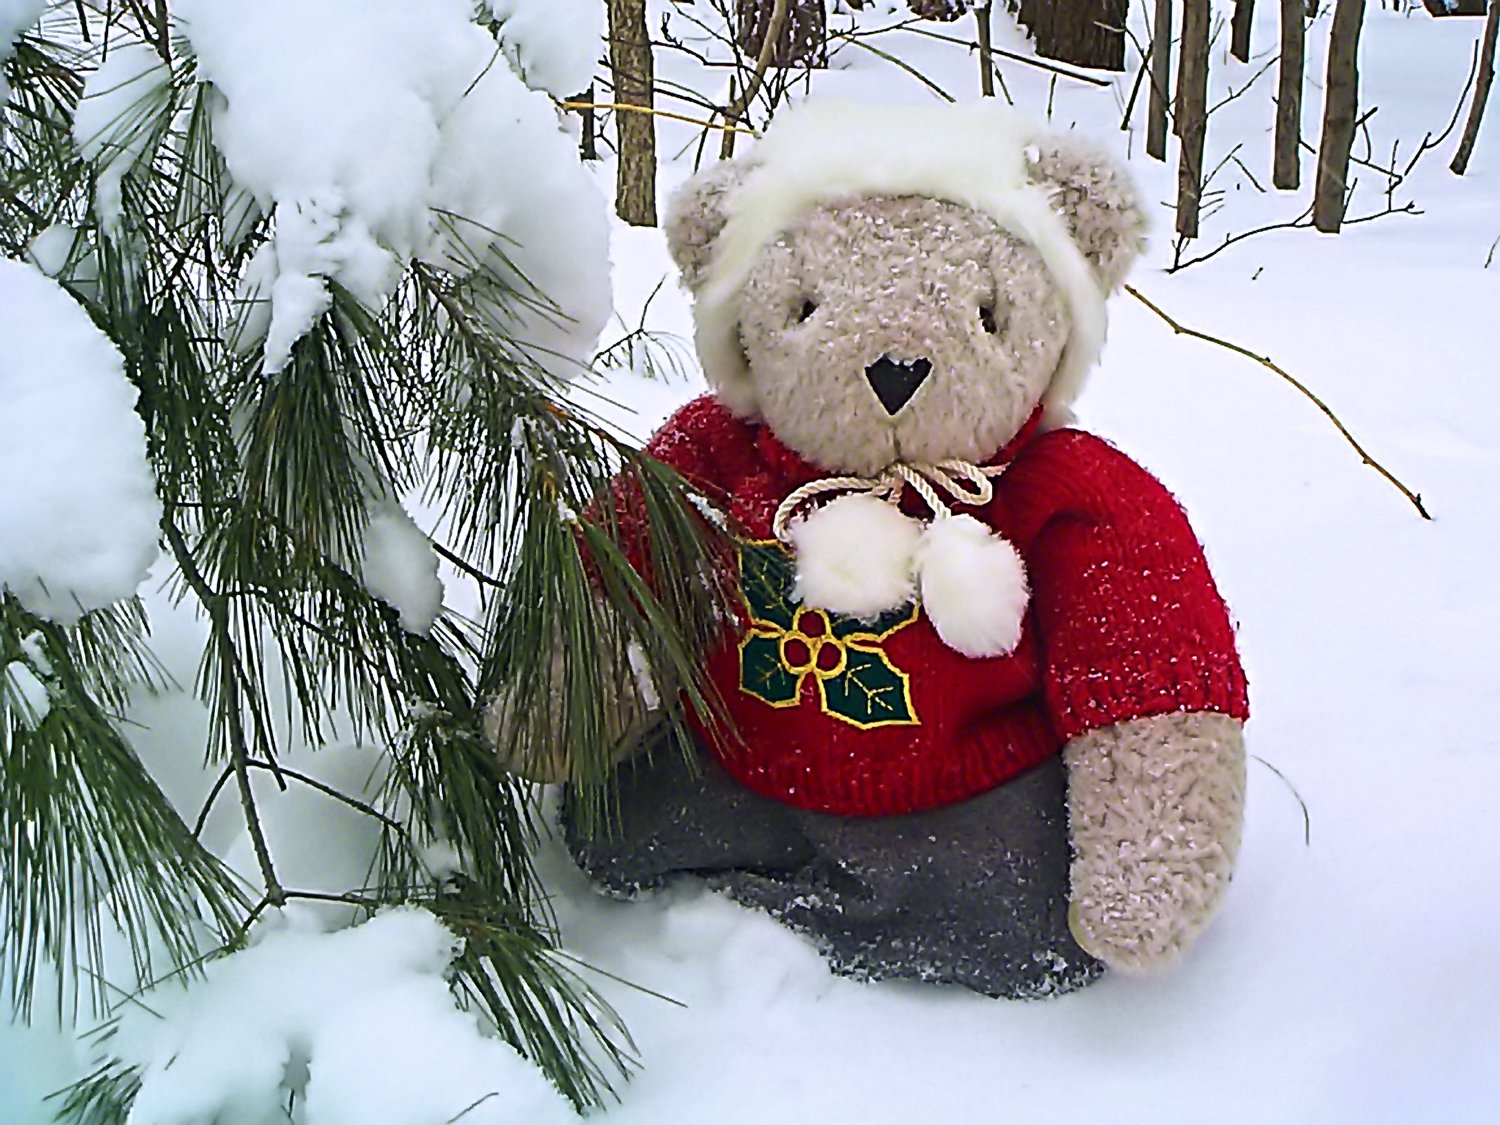 Tilly-Bear in the snow